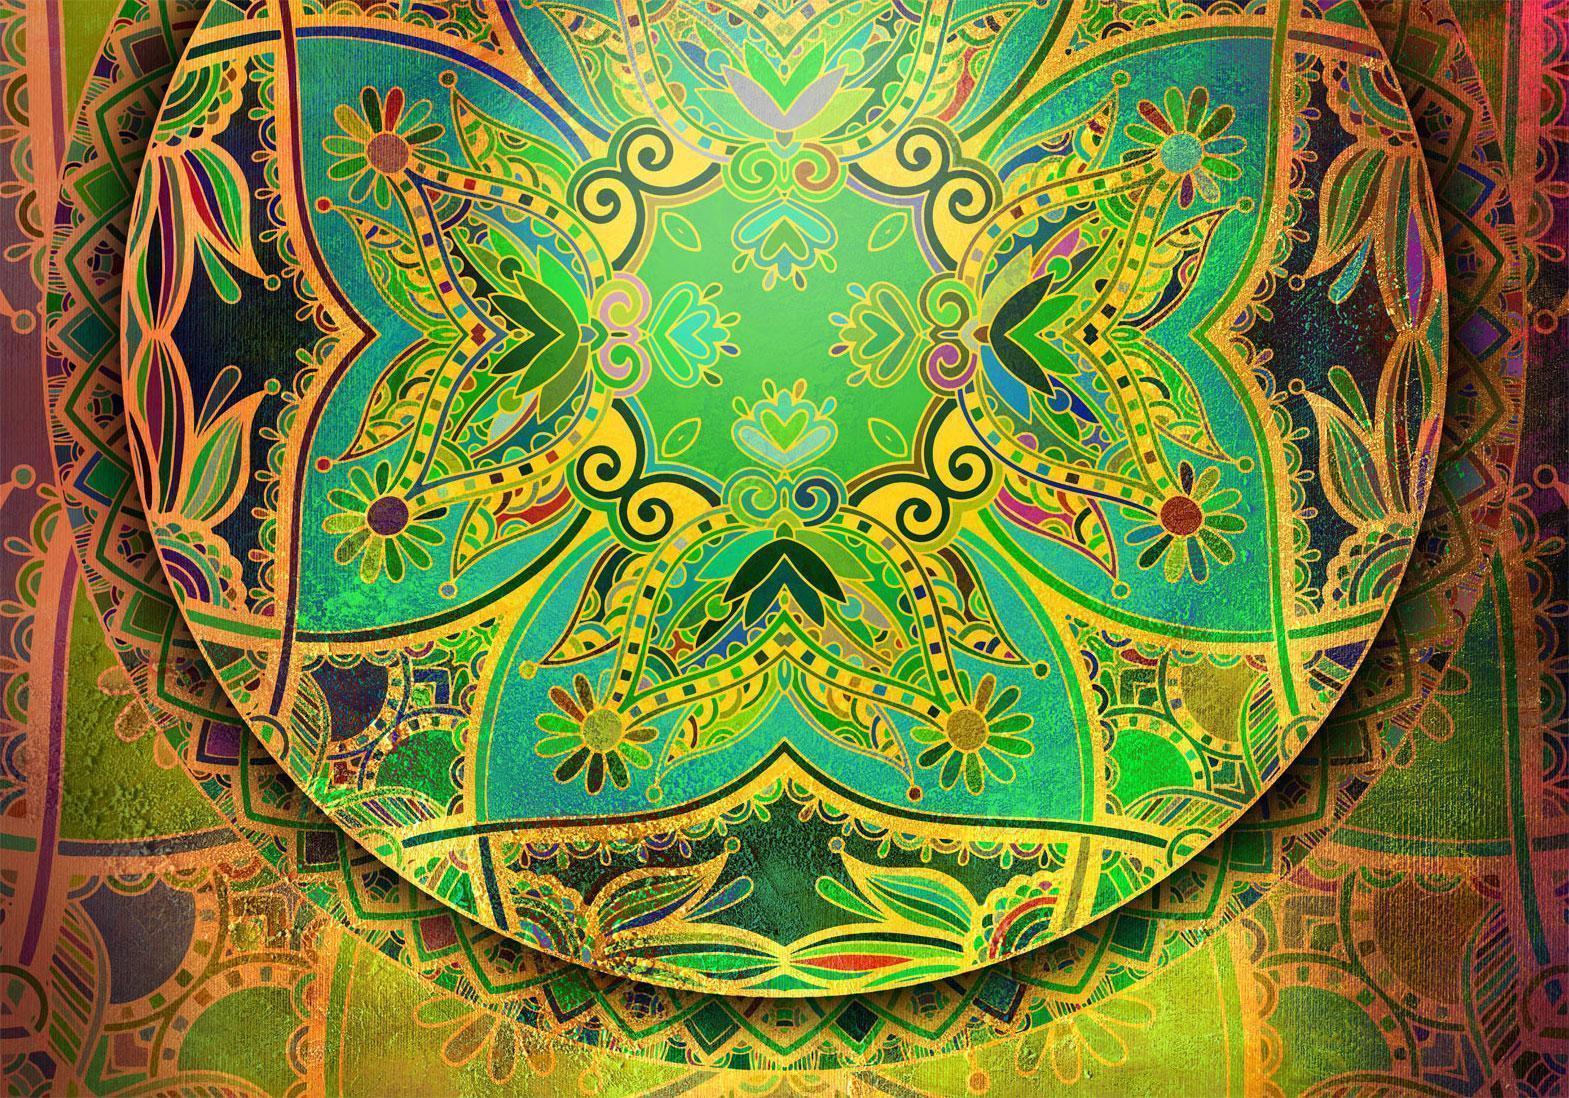 Papier peint - Mandala: Emerald Fantasy